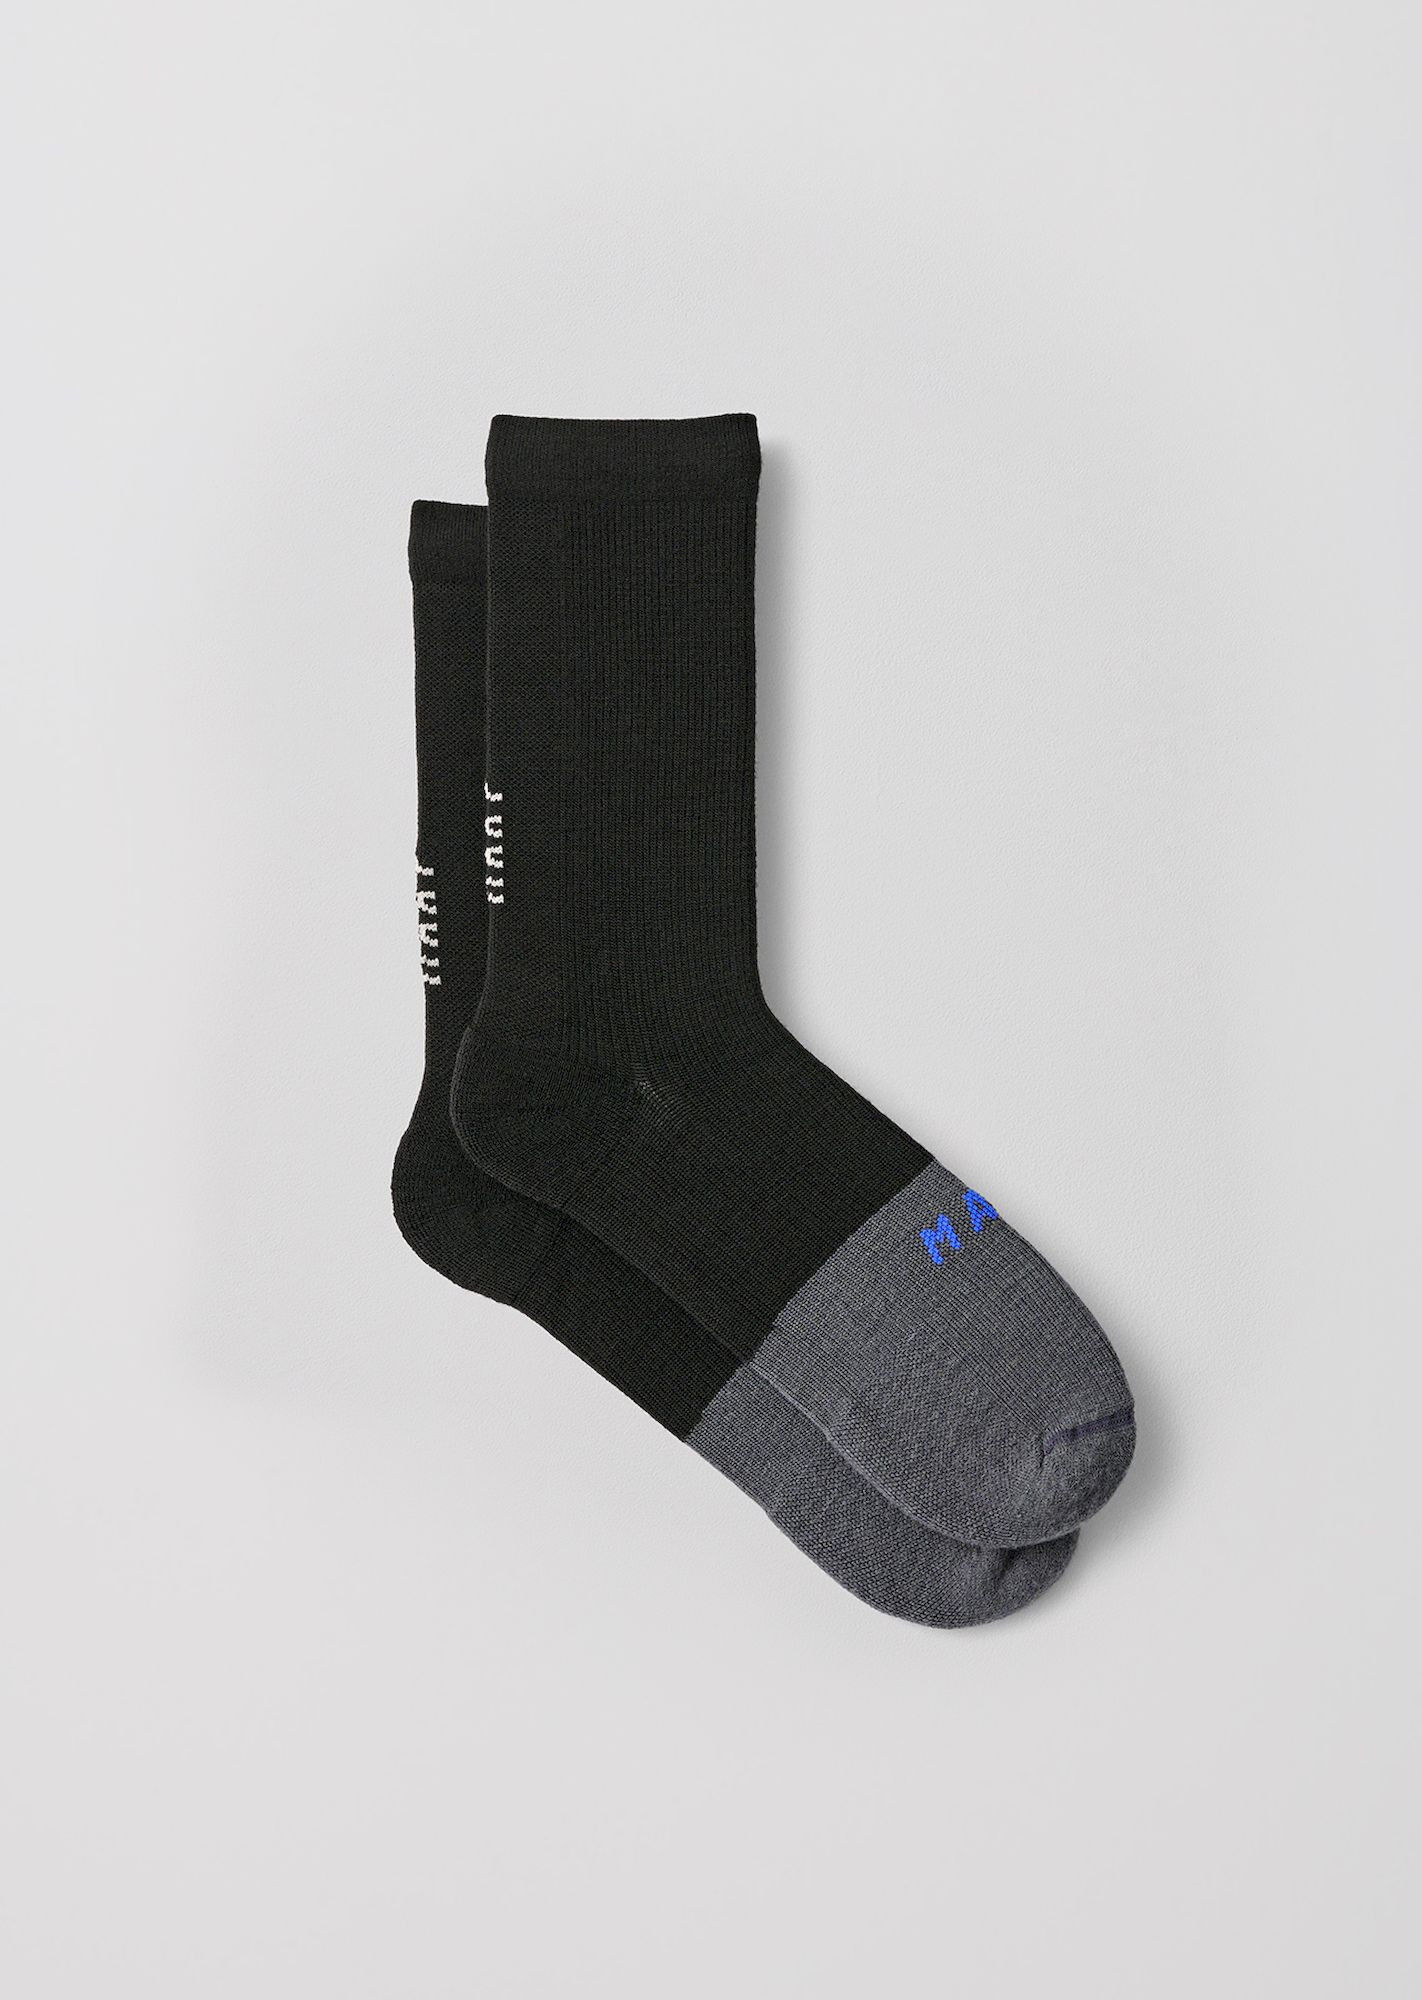 Maap Division Merino Sock - Merino socks | Hardloop